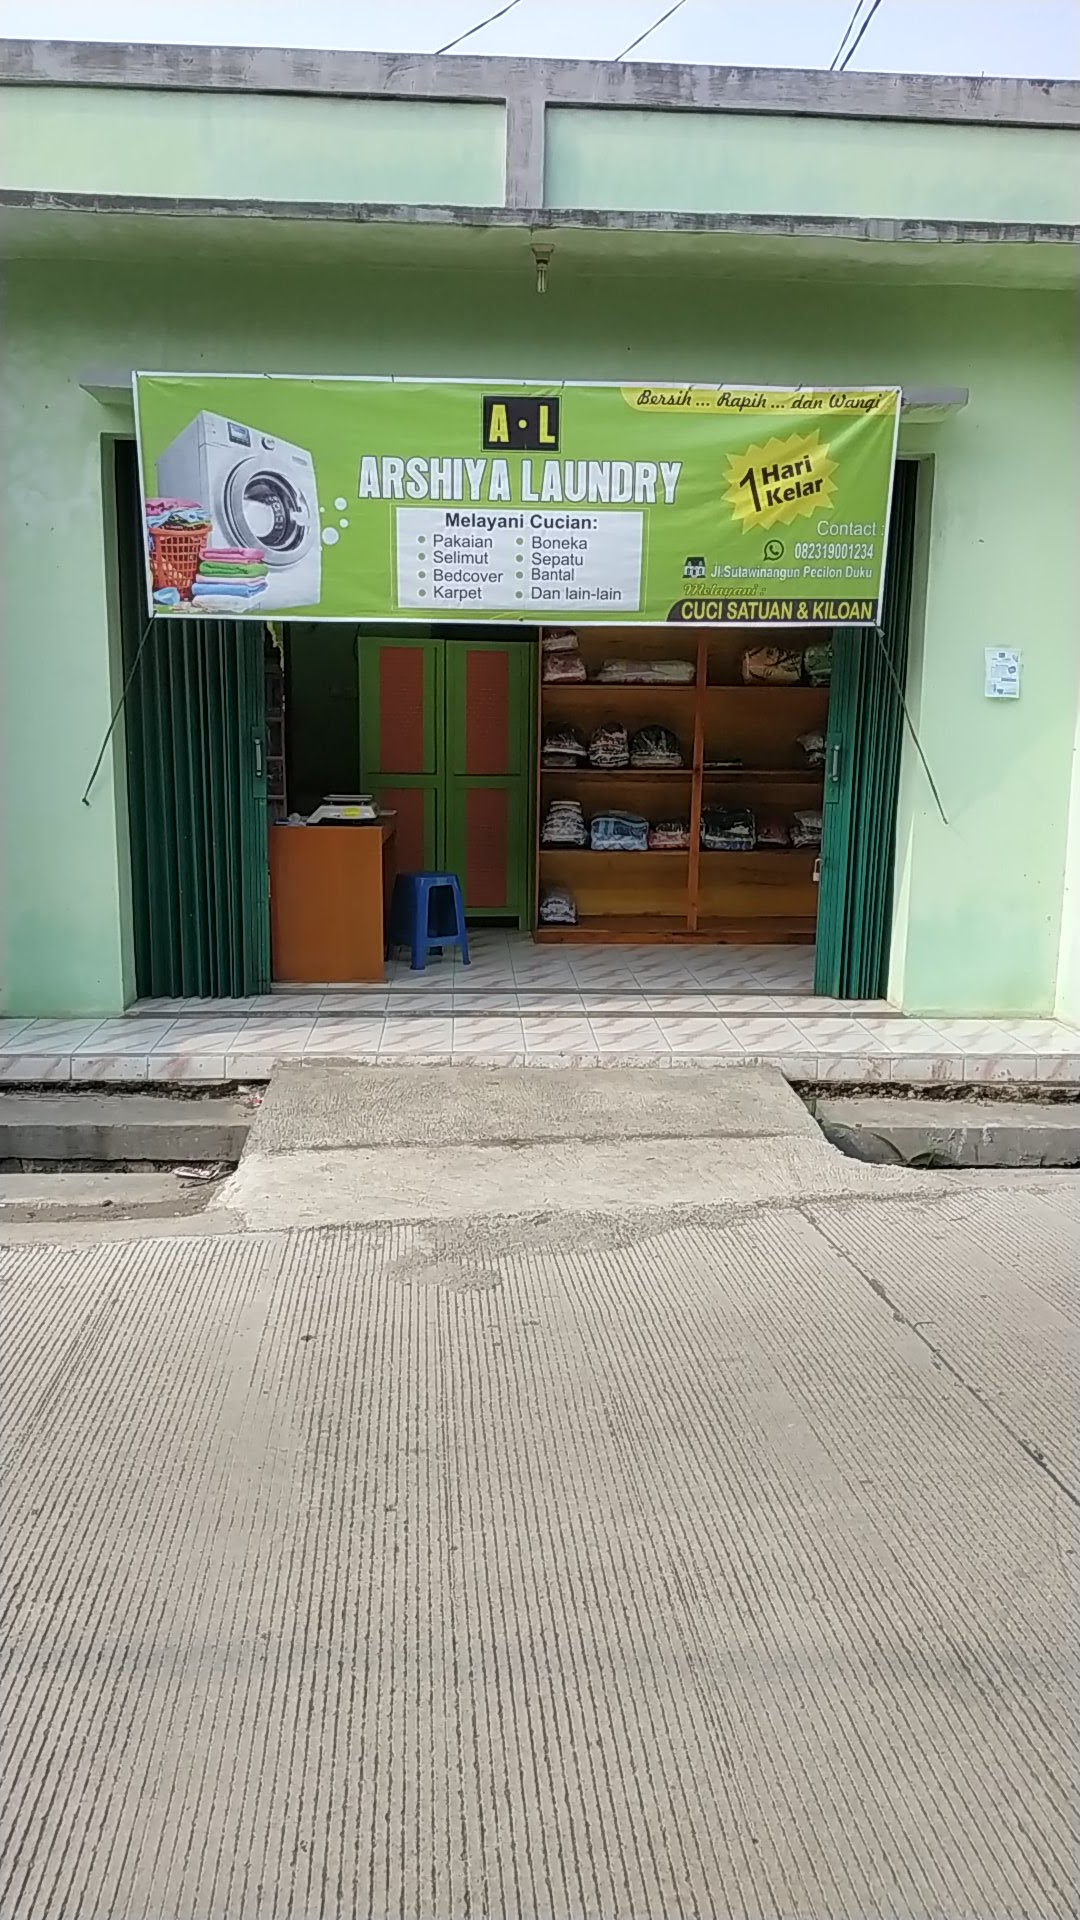 Arshiya Laundry